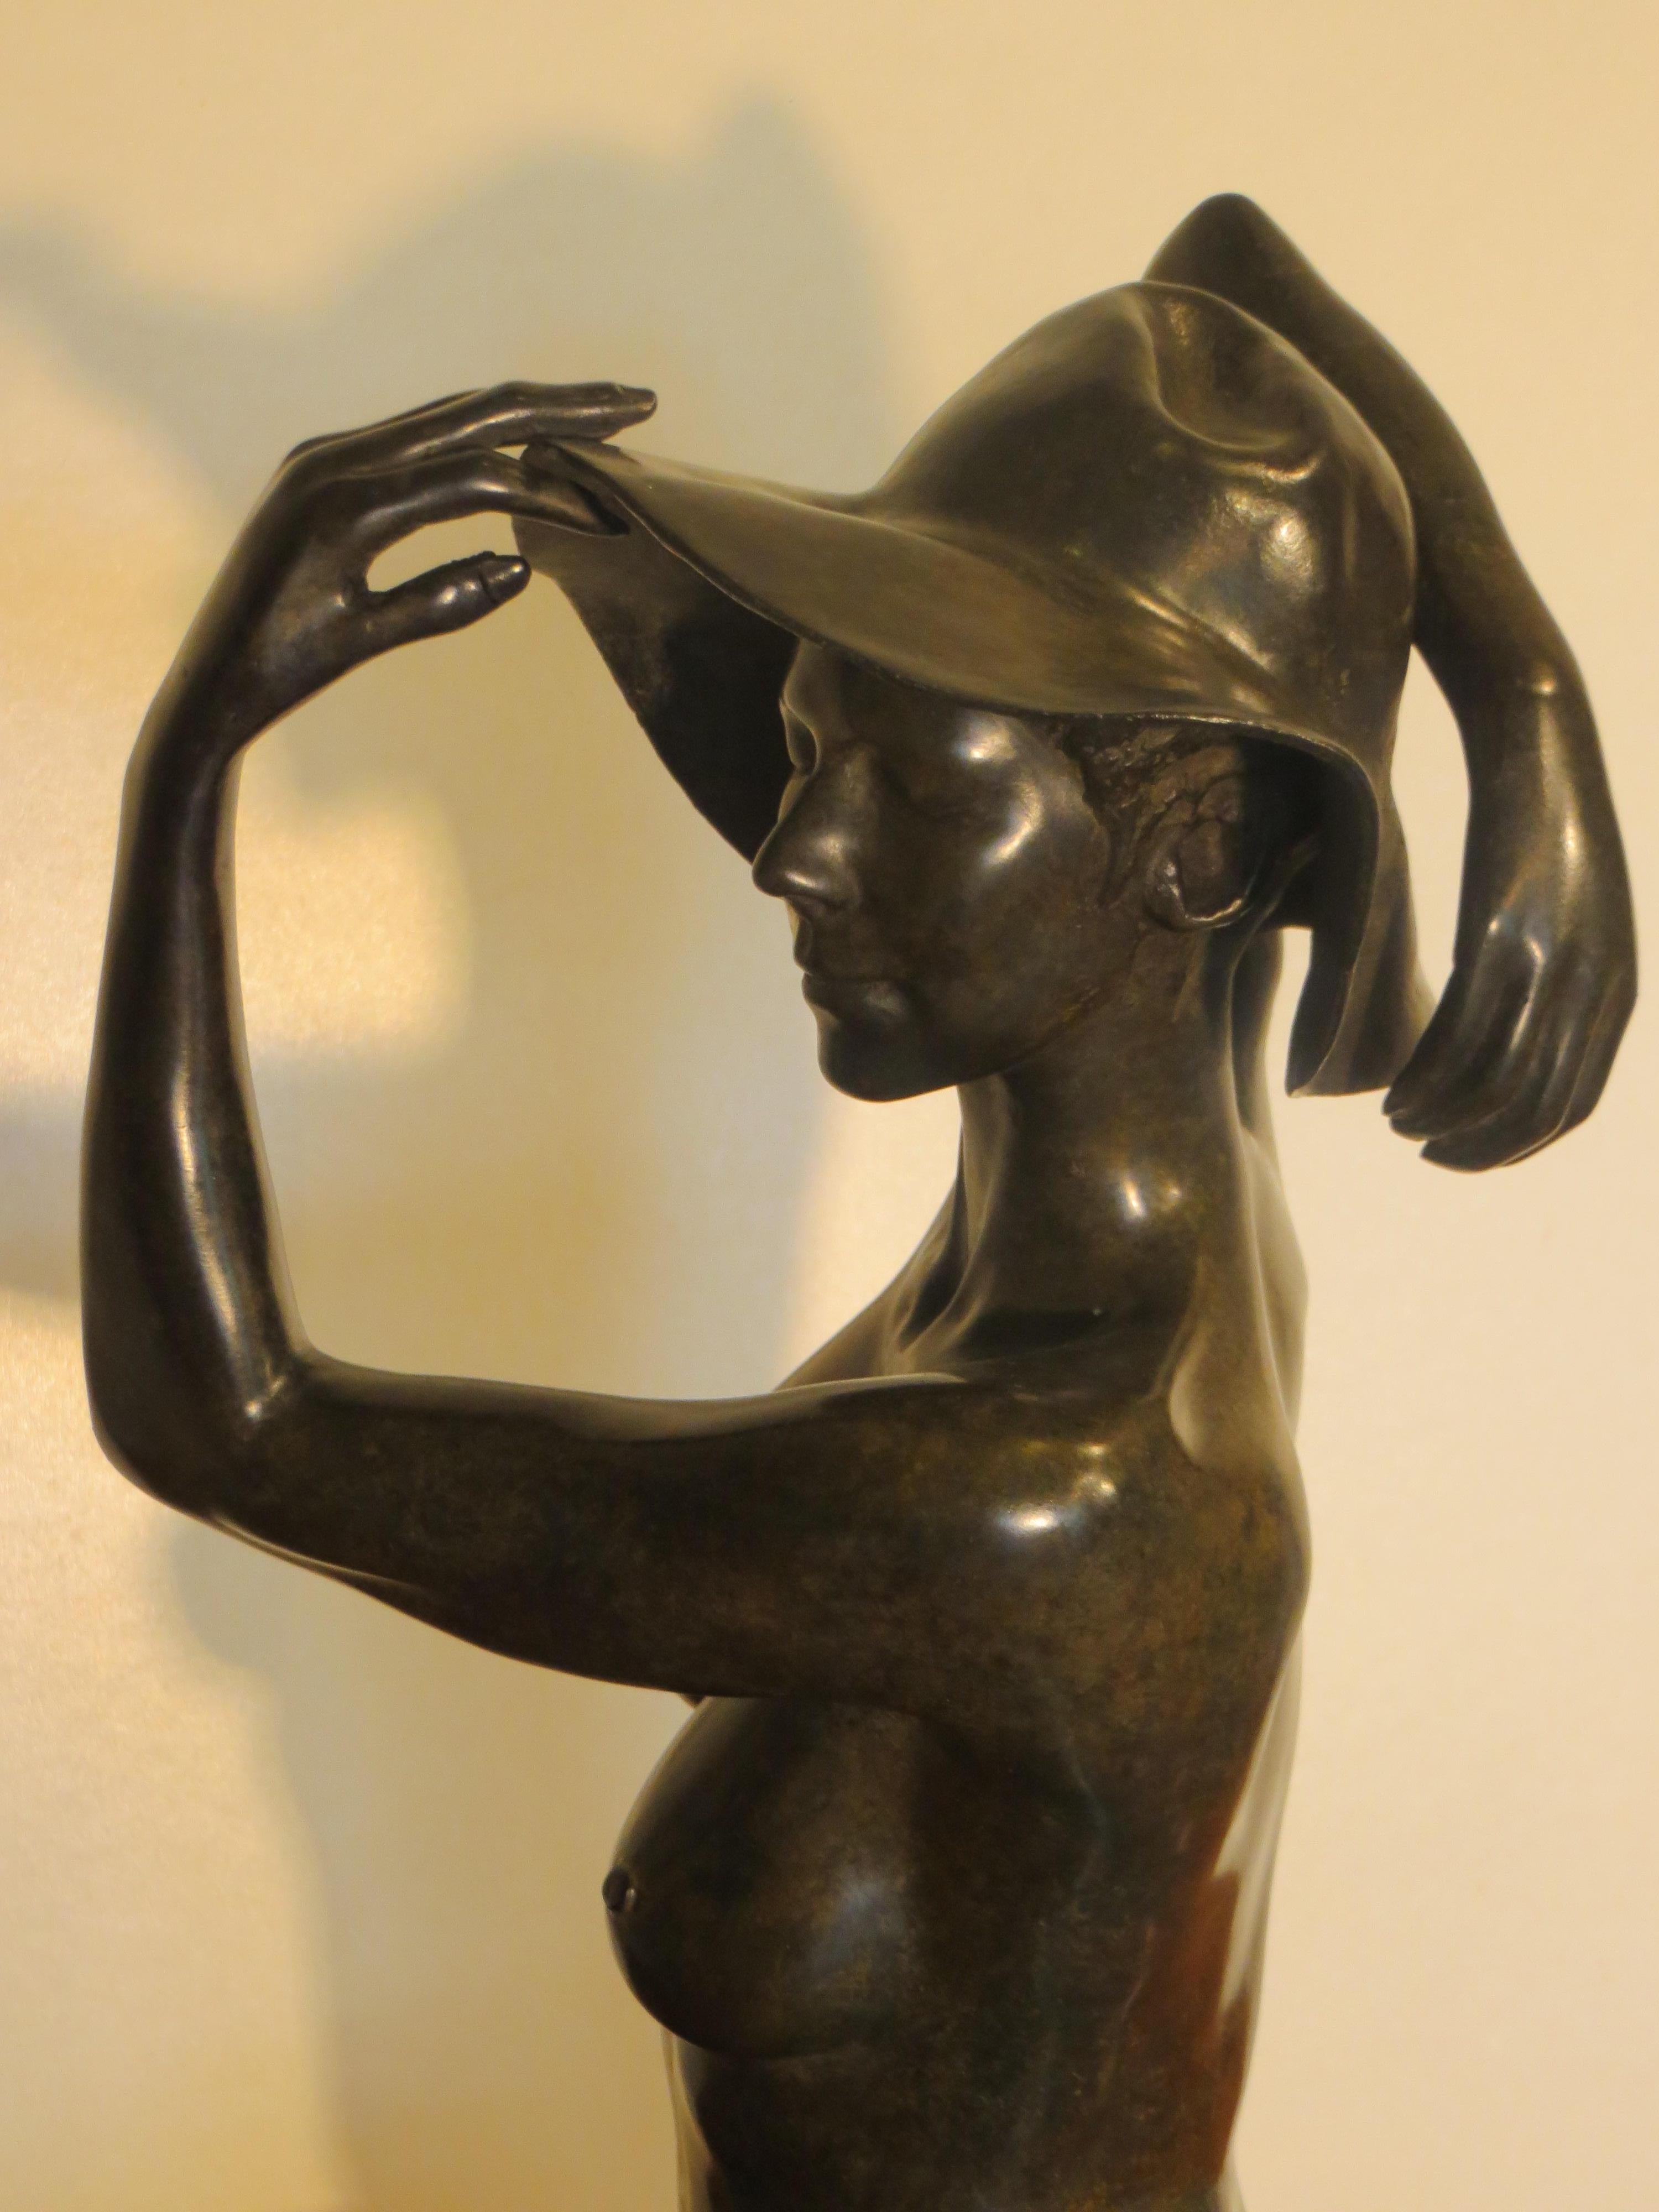 Bérangère with a Hat - Gold Nude Sculpture by Patrick Brun